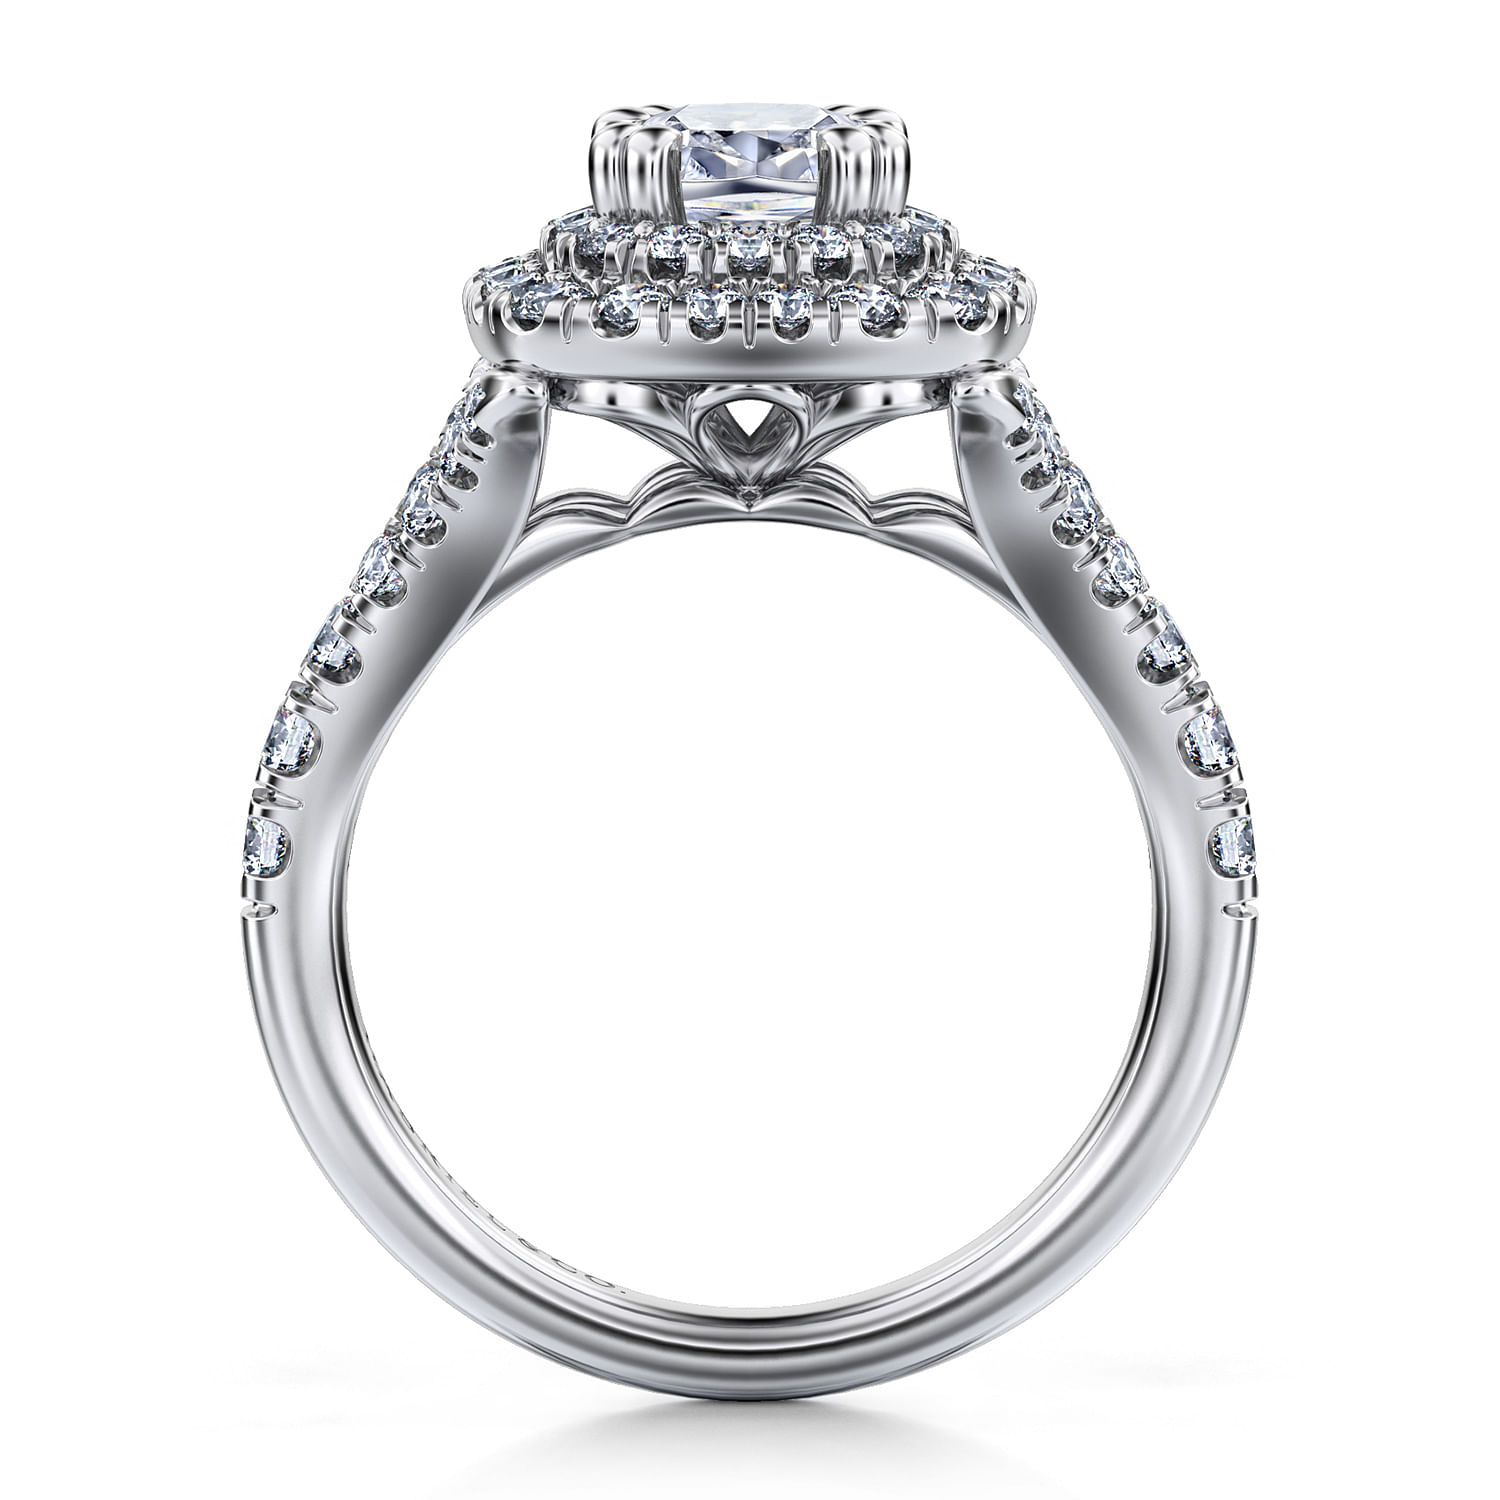 14K White Gold Cushion Cut Double Halo Diamond Engagement Ring